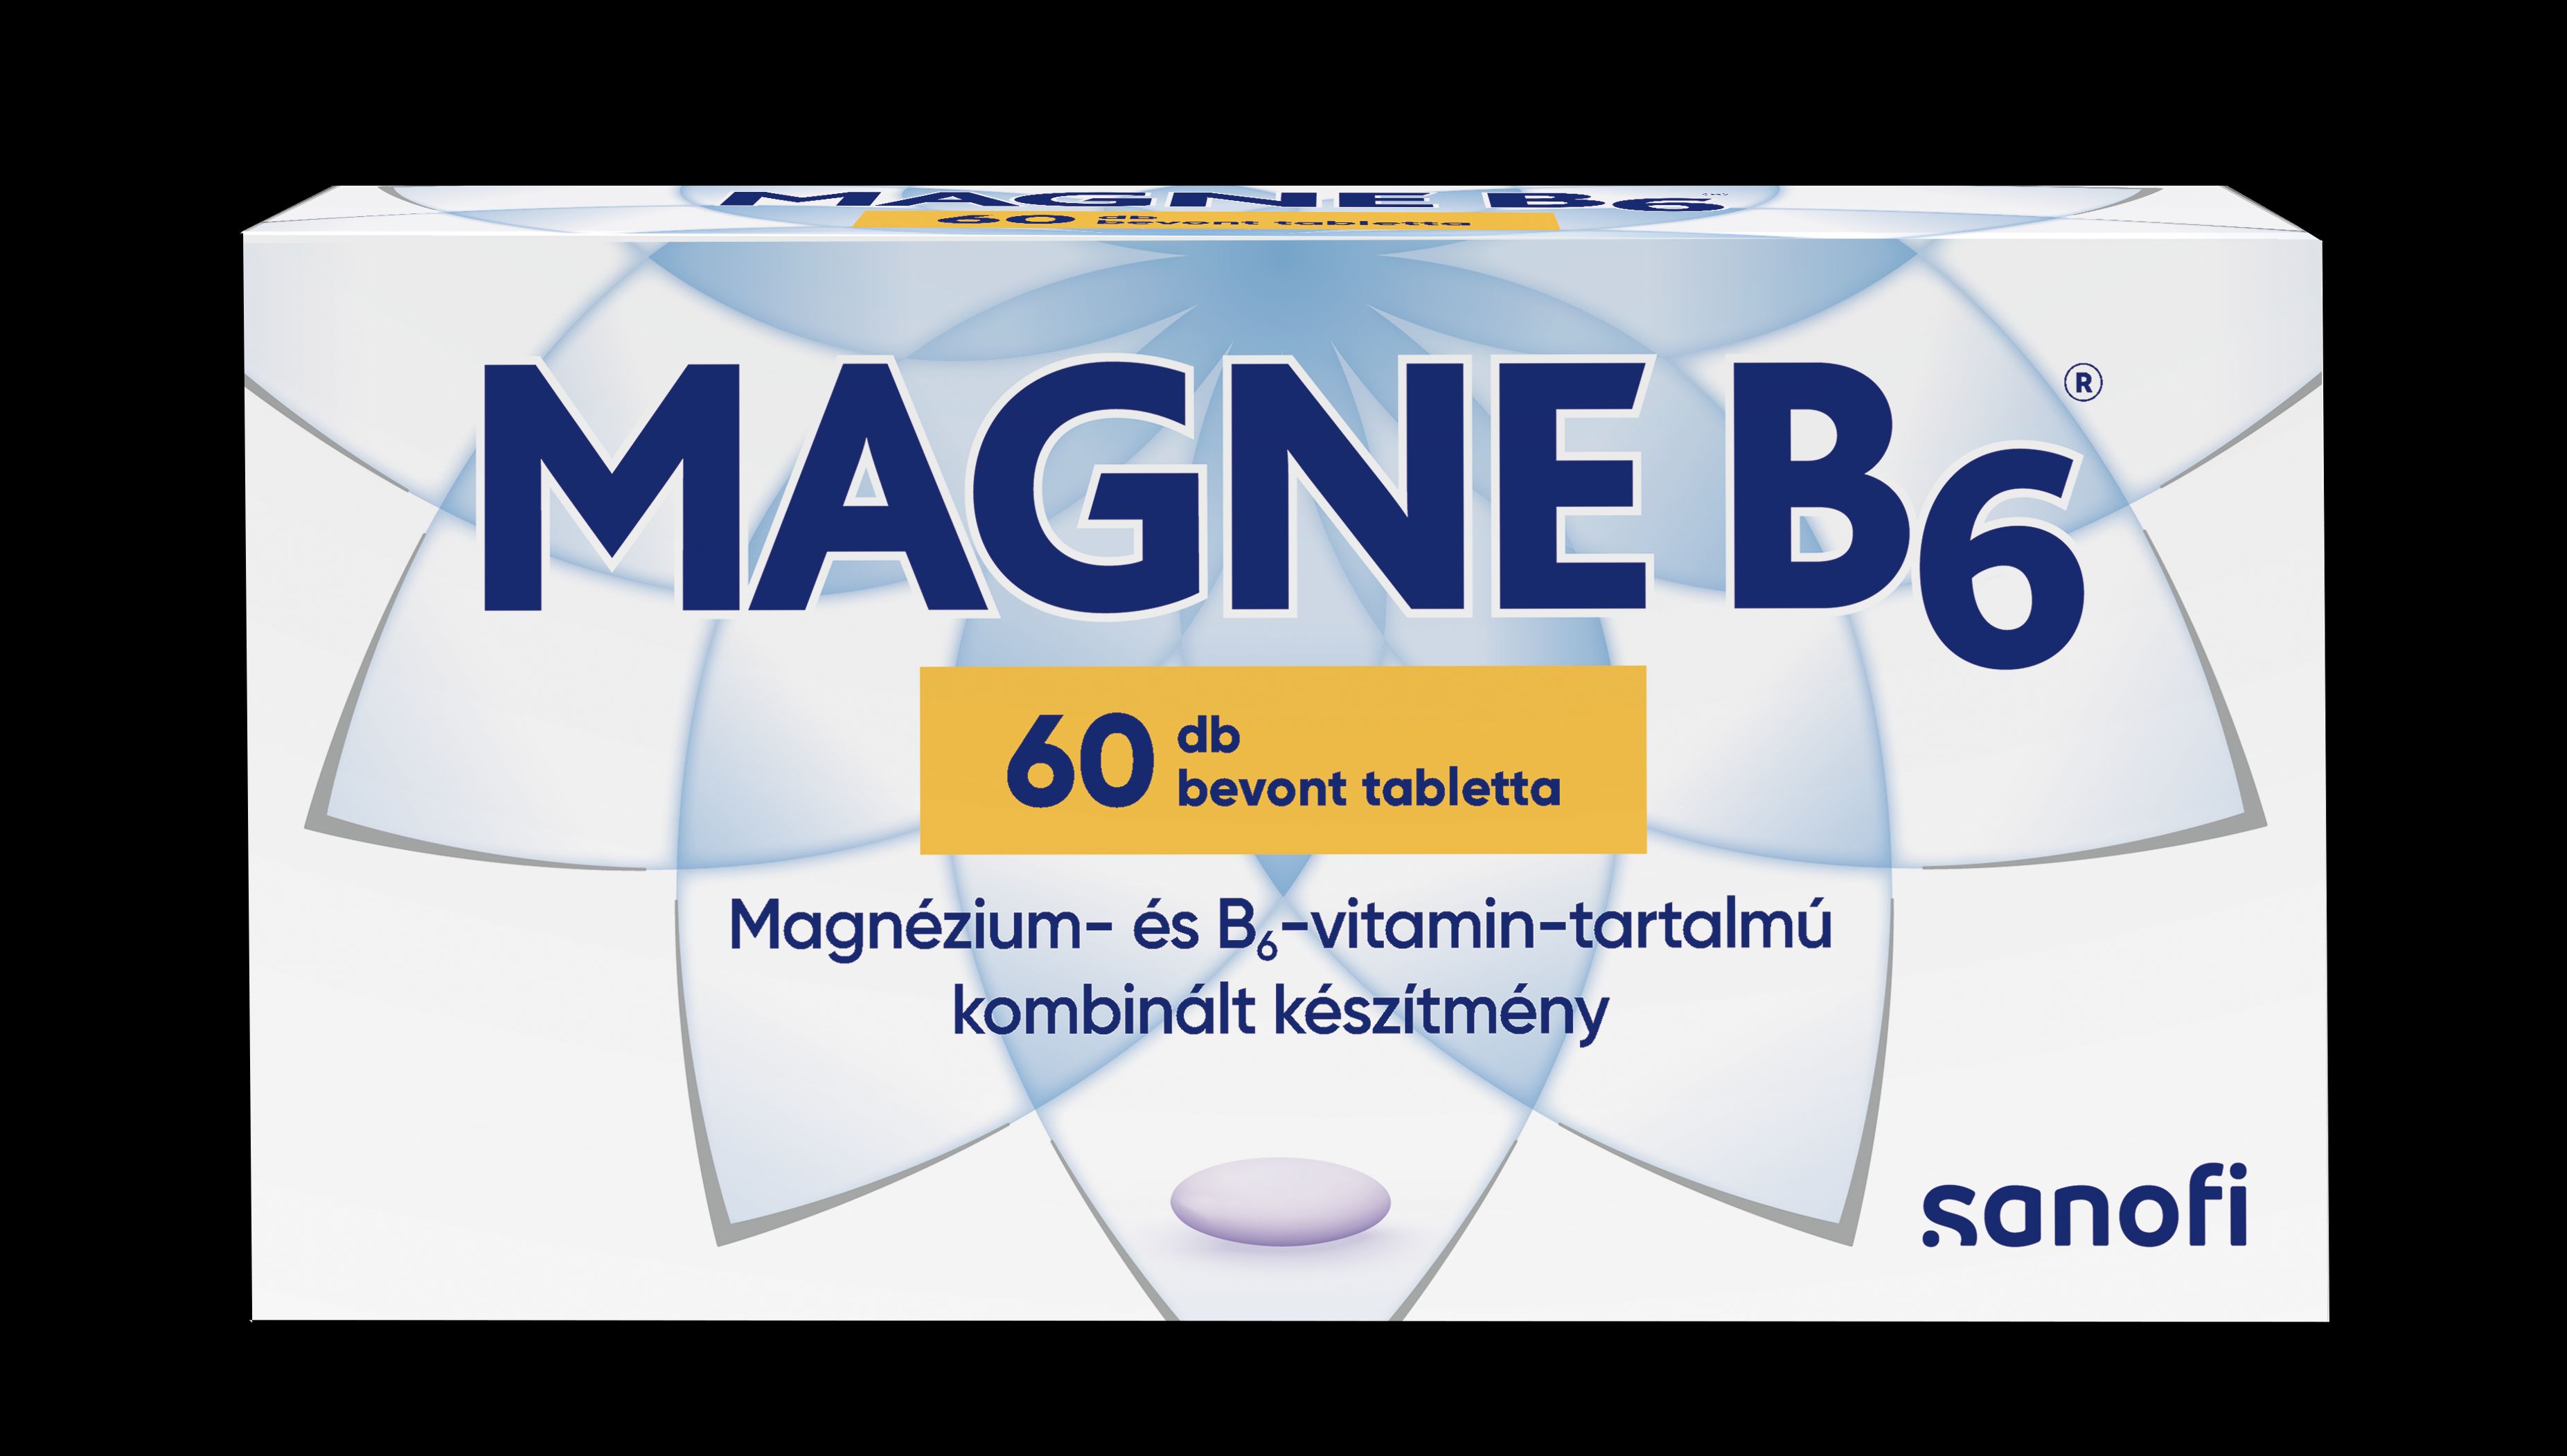 Magne B6 bevont tabletta 